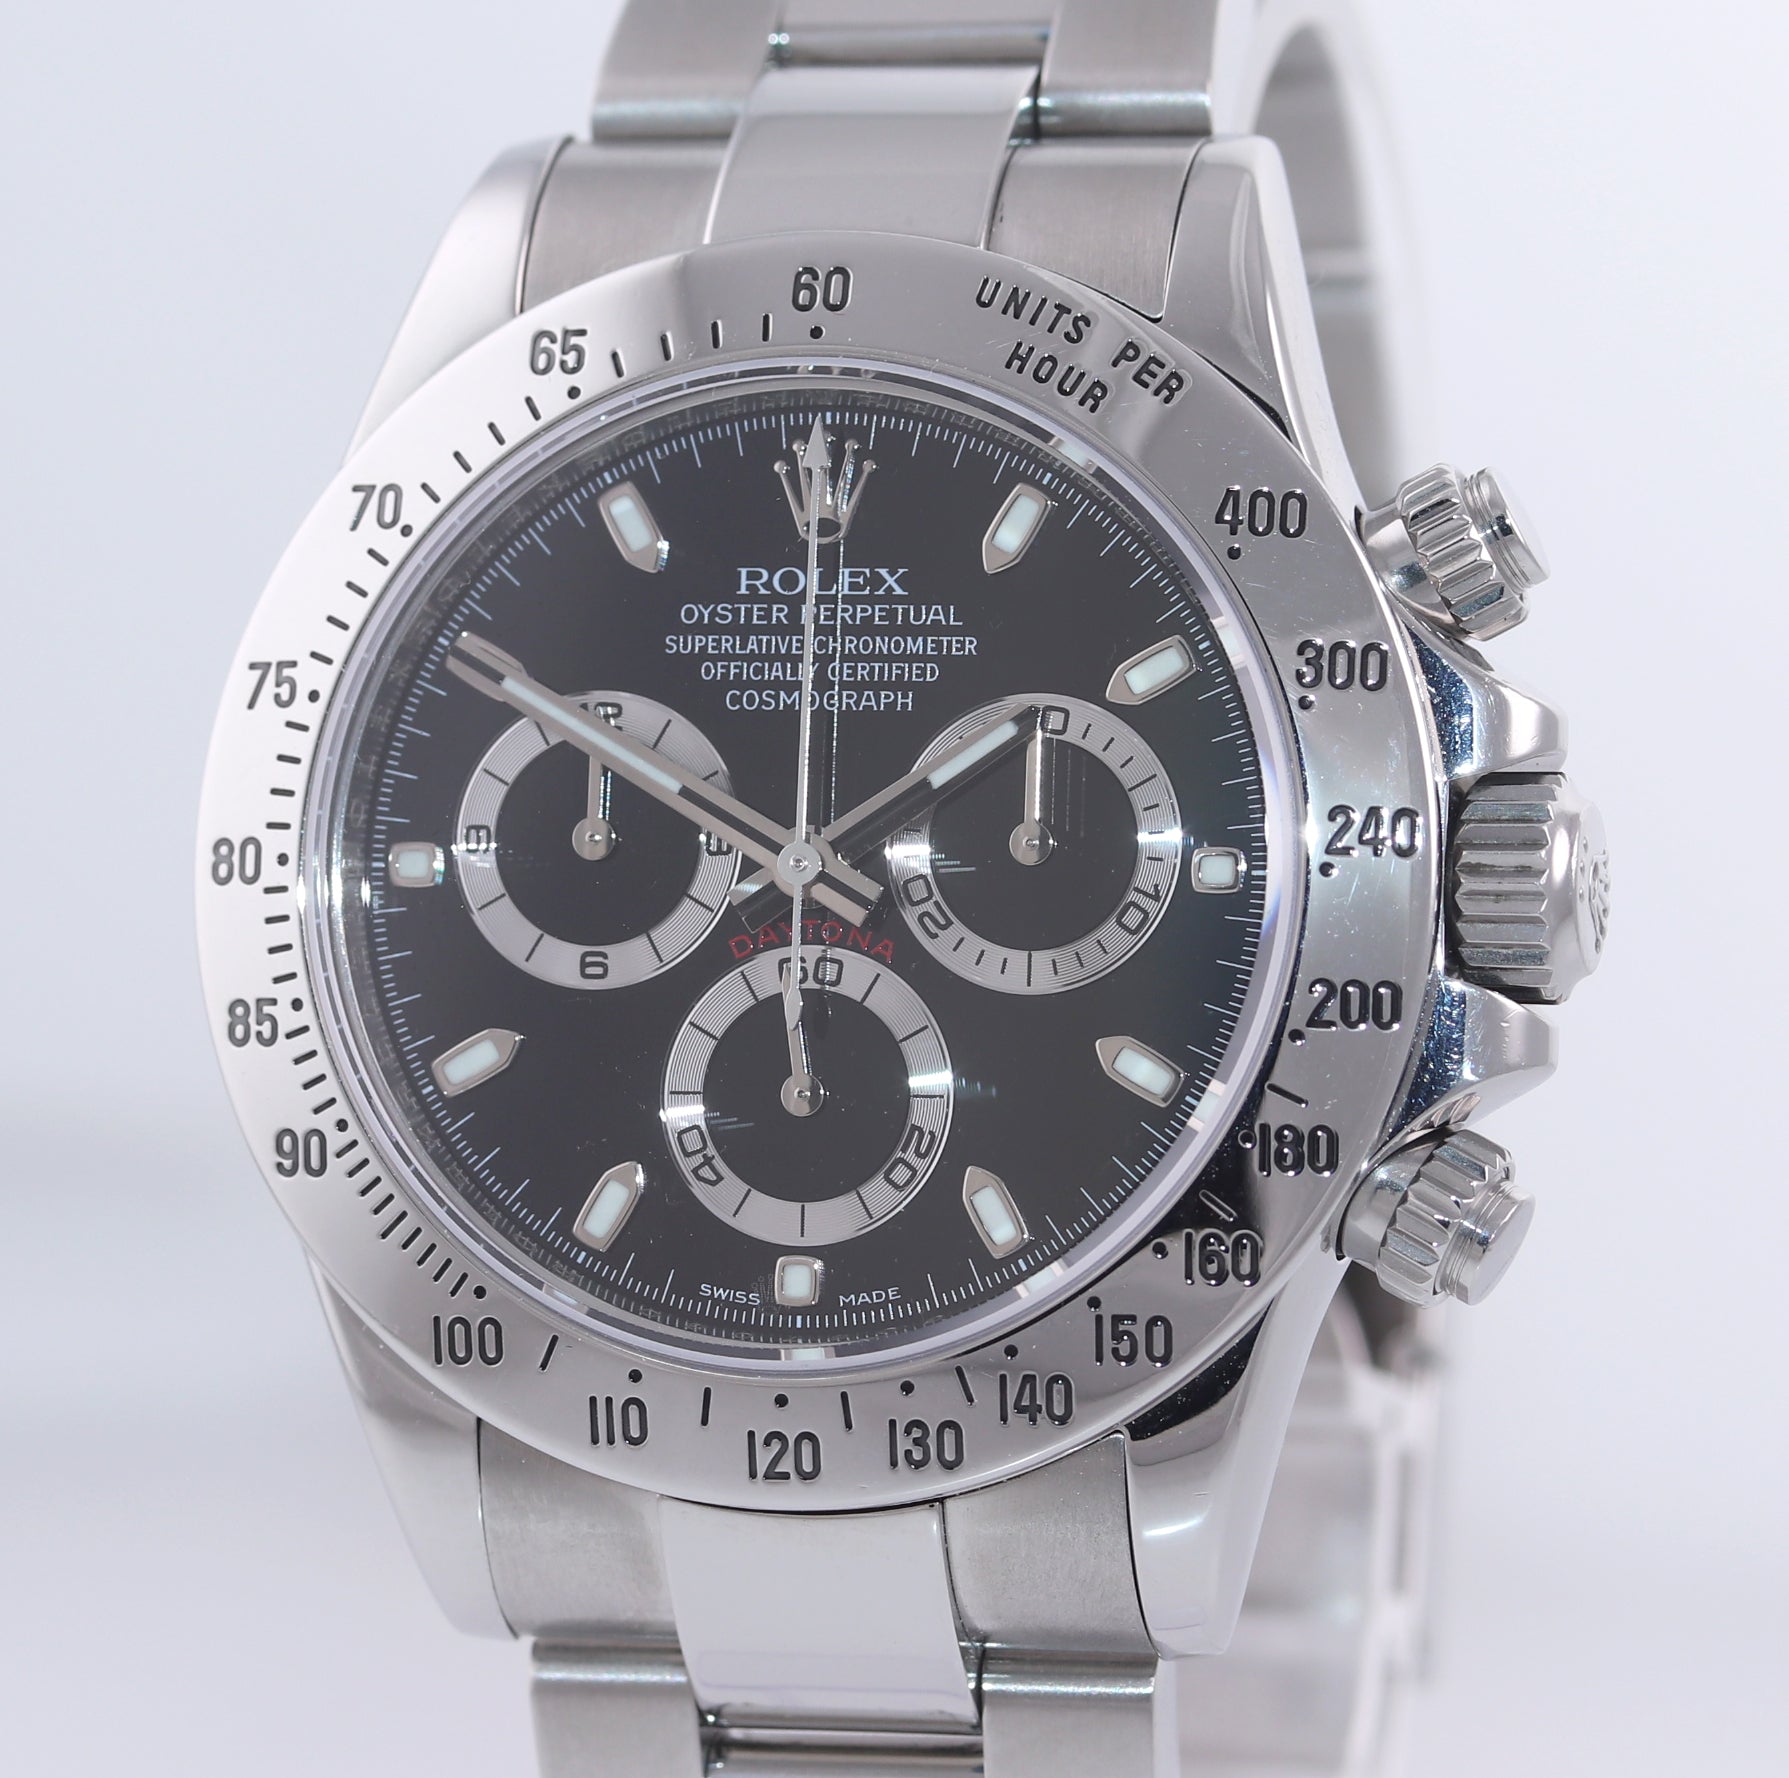 2014 PAPERS Rolex Daytona Cosmograph 116520 Black Steel 40mm Chrono Watch Box